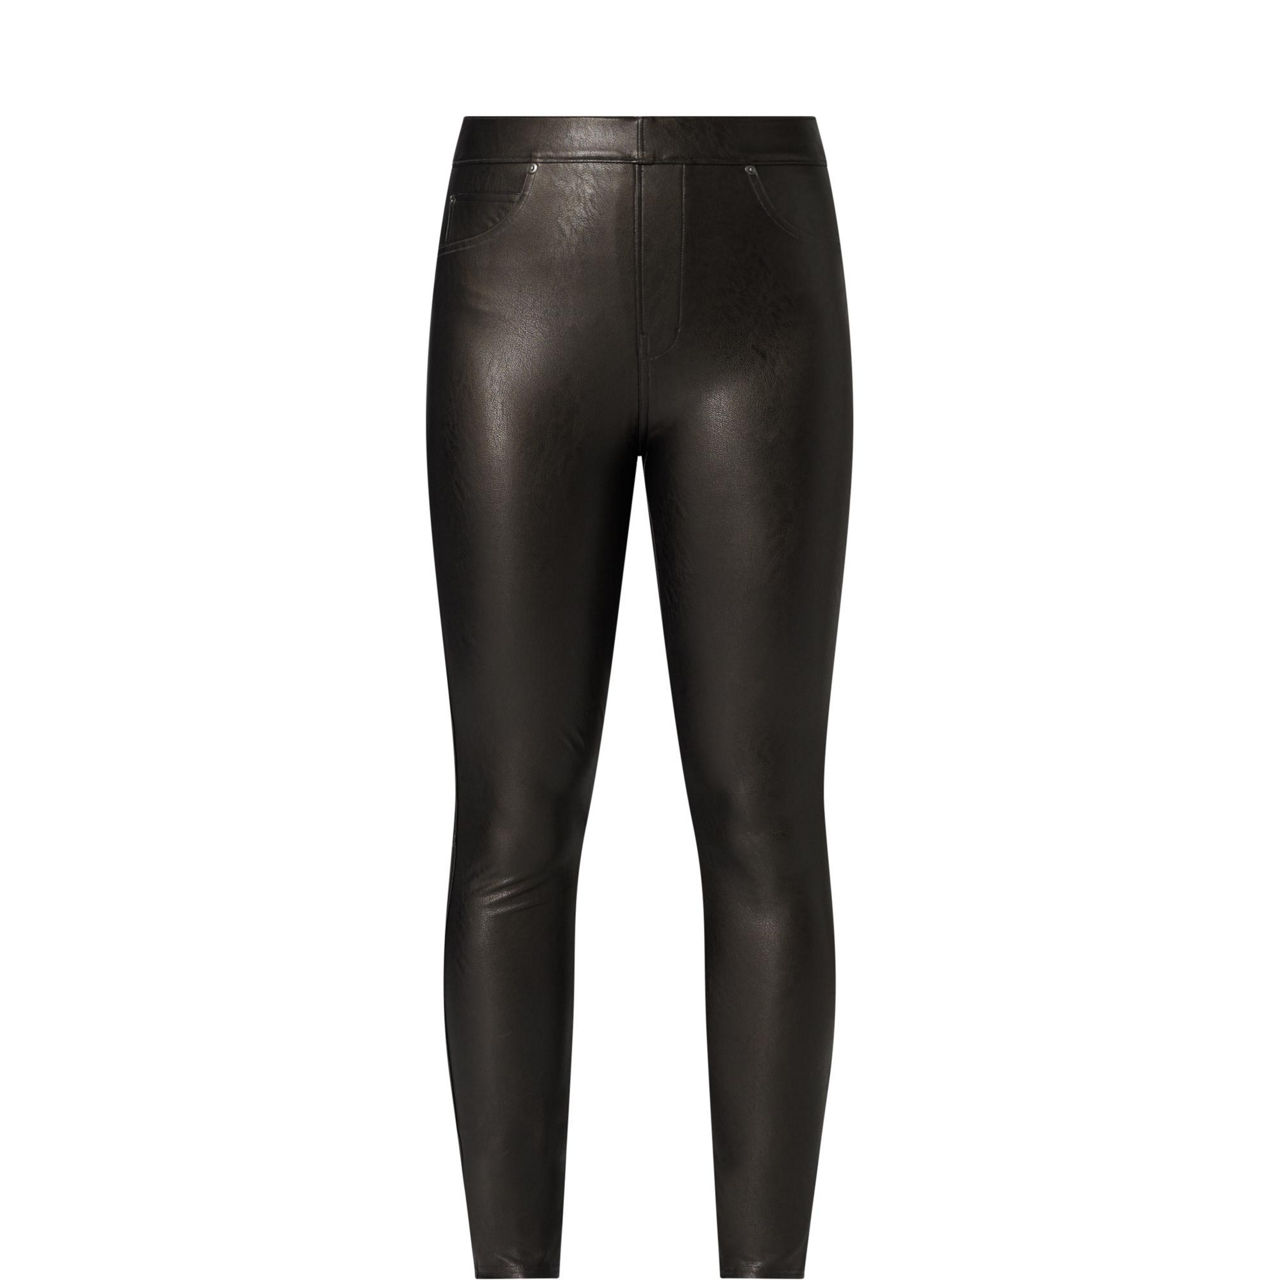 NEW SPANX [ Medium ] Faux Leather Leggings in Black #5163